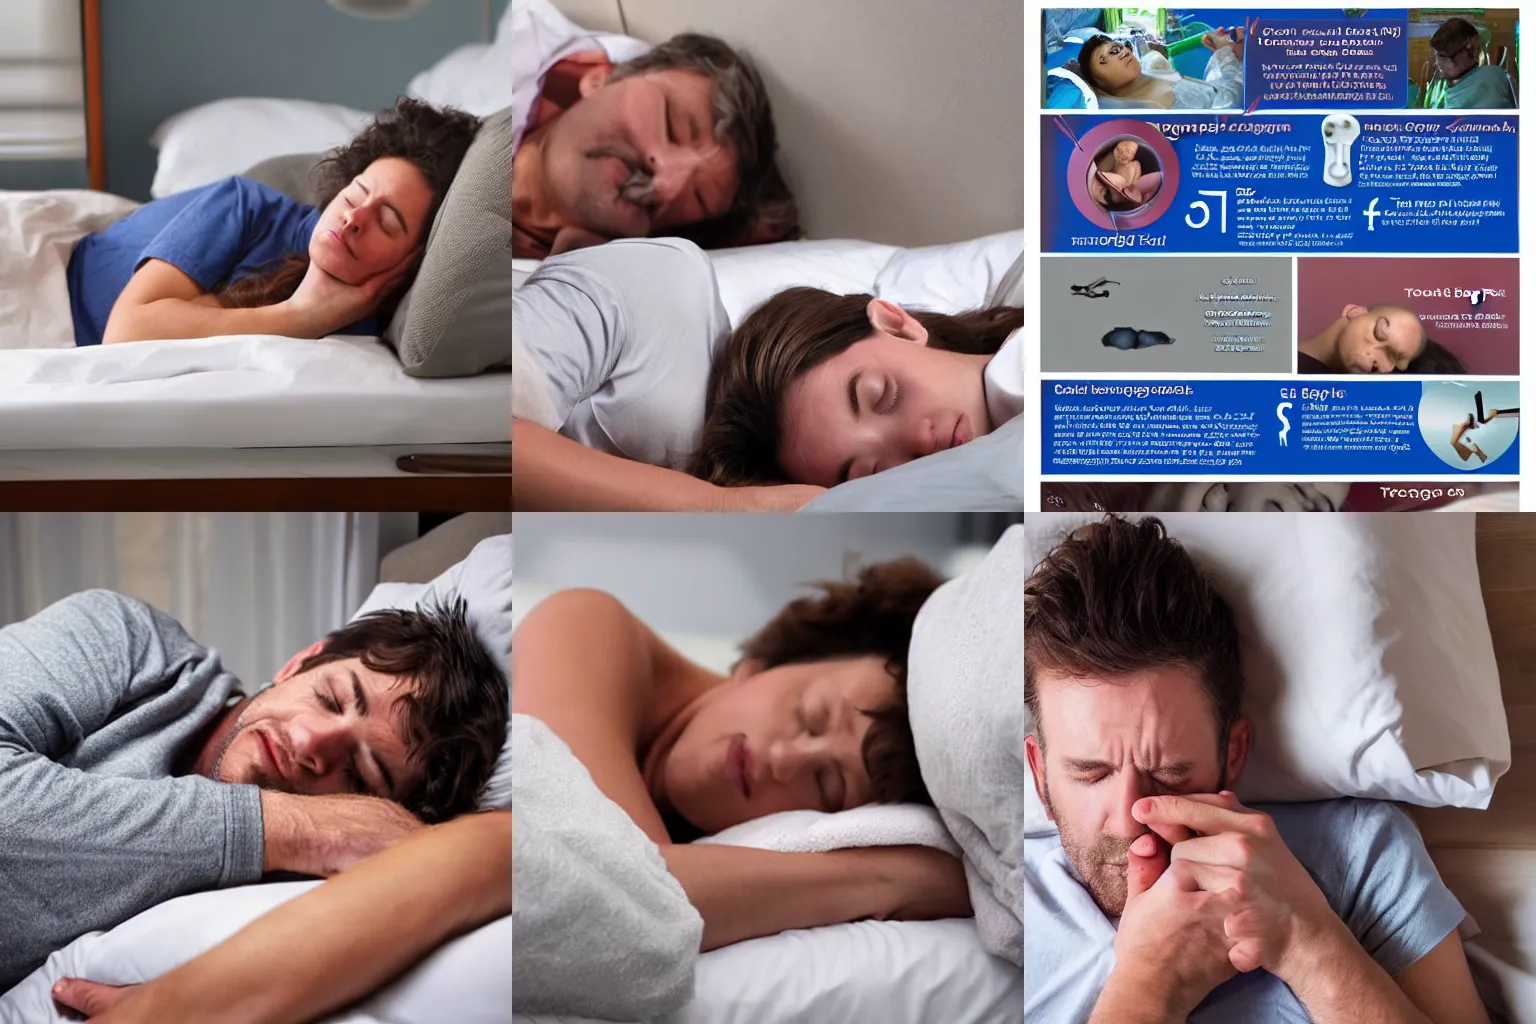 Prompt: Sleep apnea nightmares